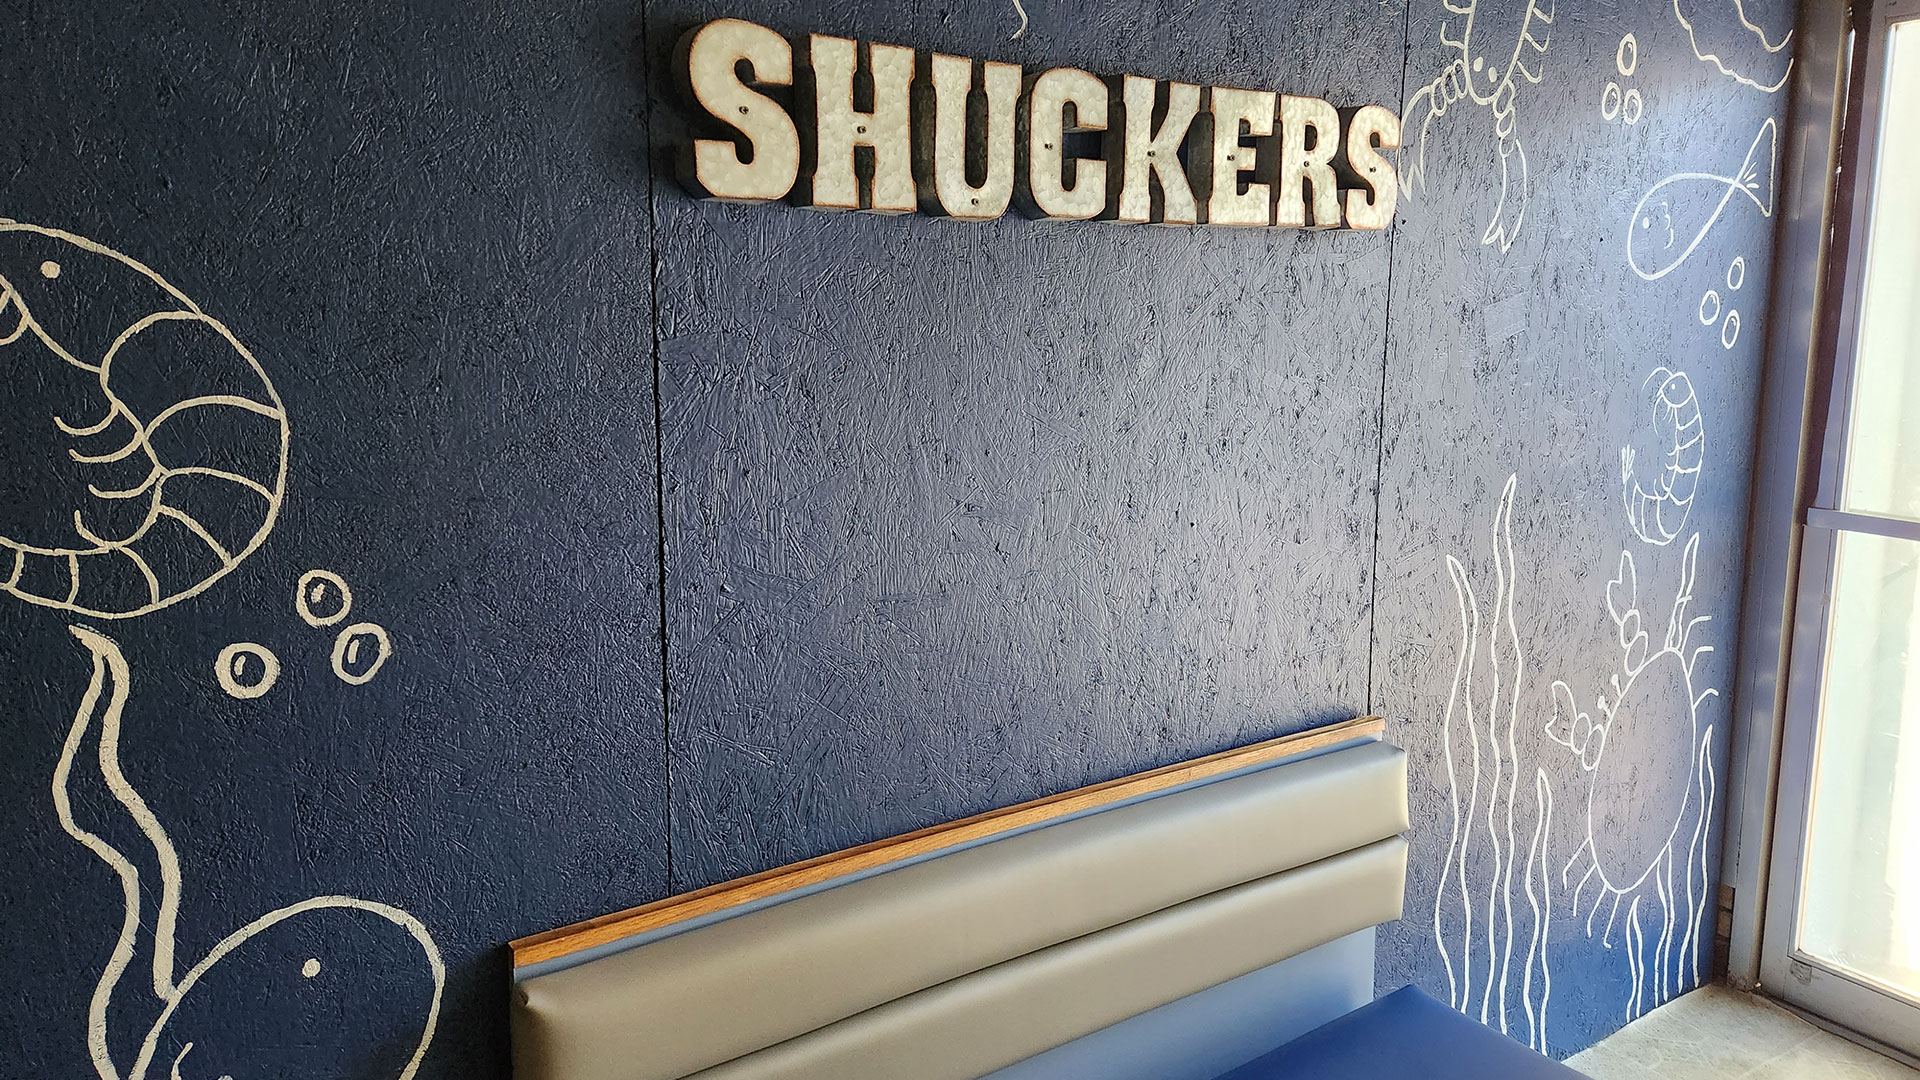 Shuckers Restaurant Serving Seafood & Italian